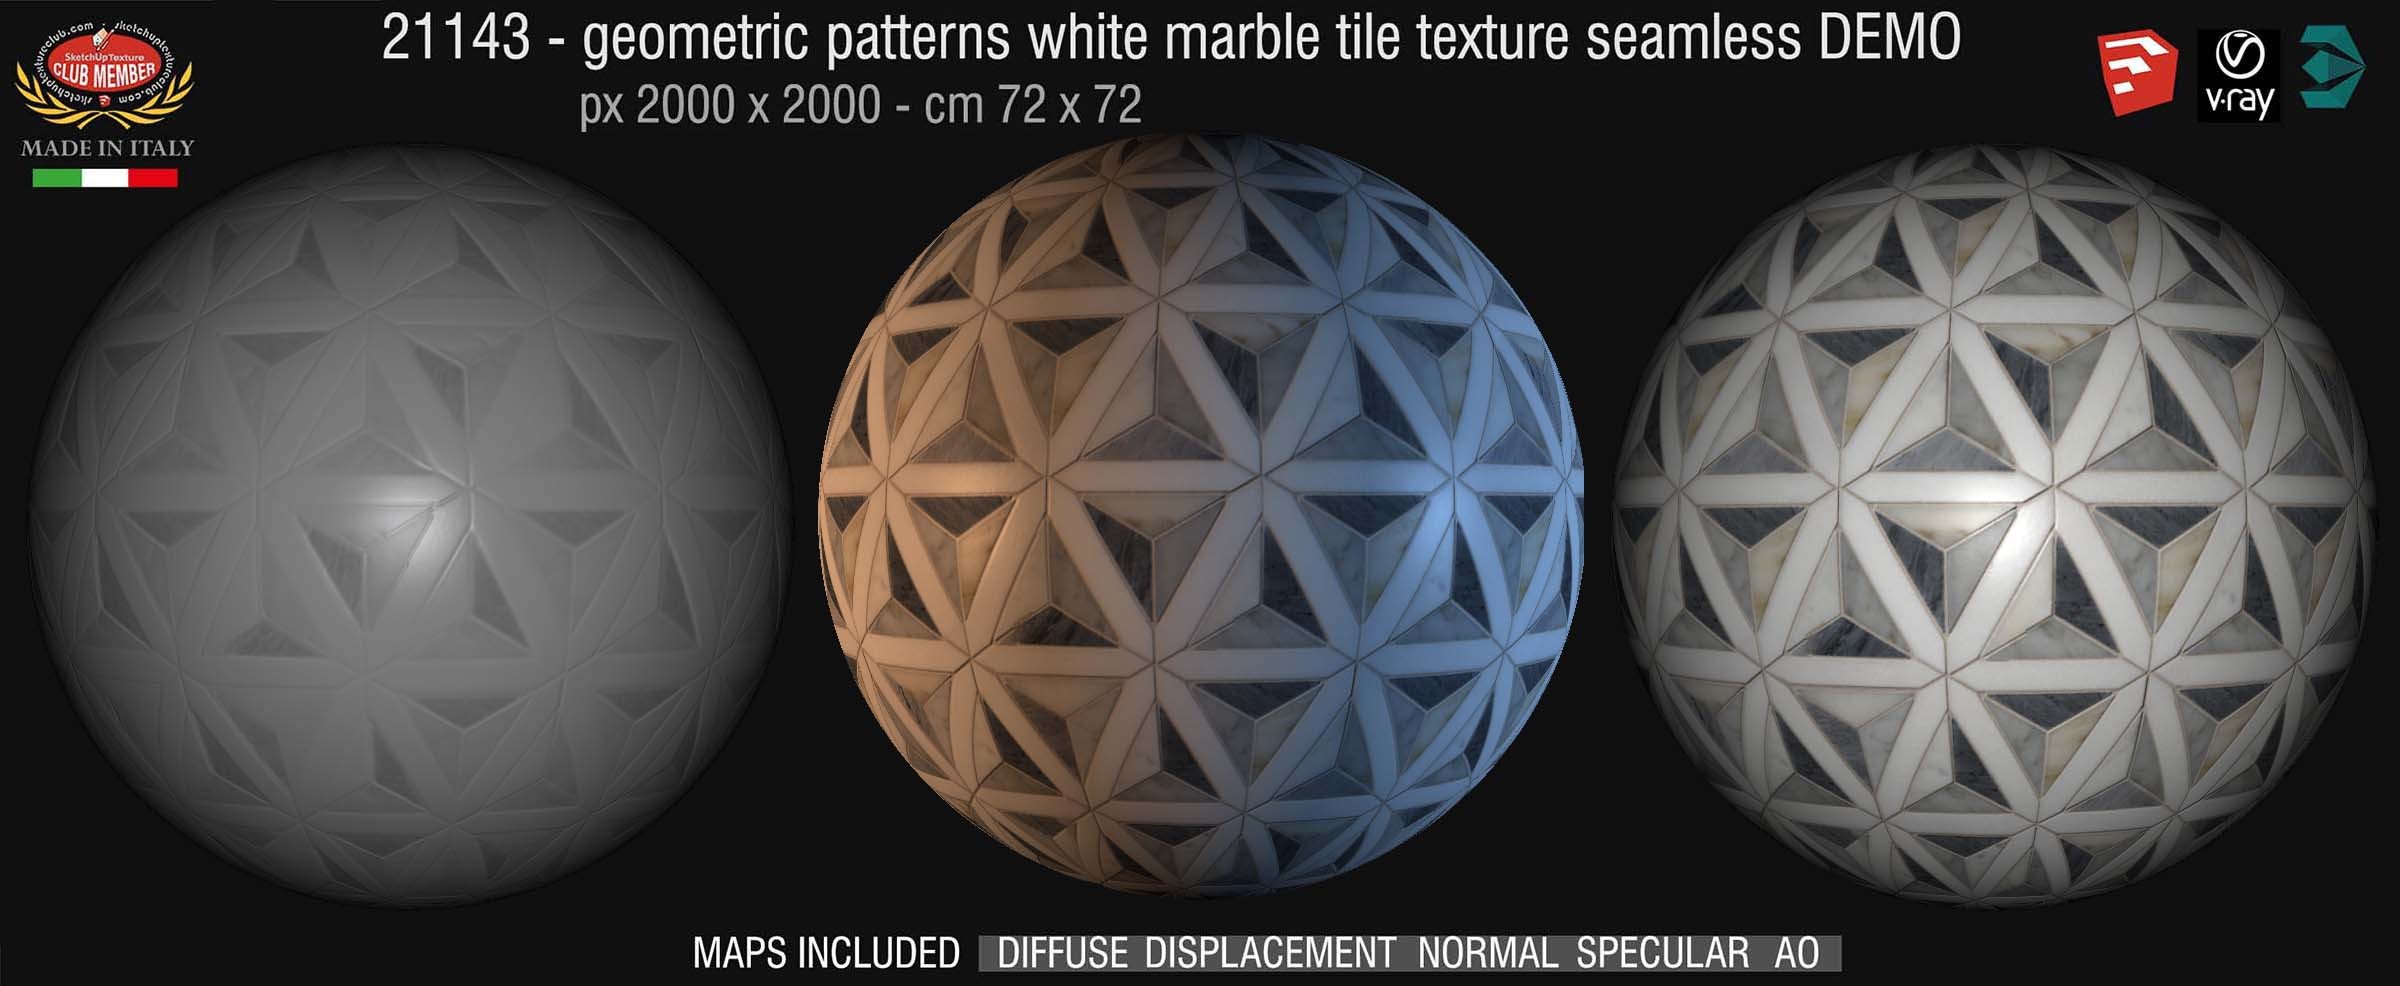 21143 Geometric pattern white marble floor tile texture seamless + maps DEMO